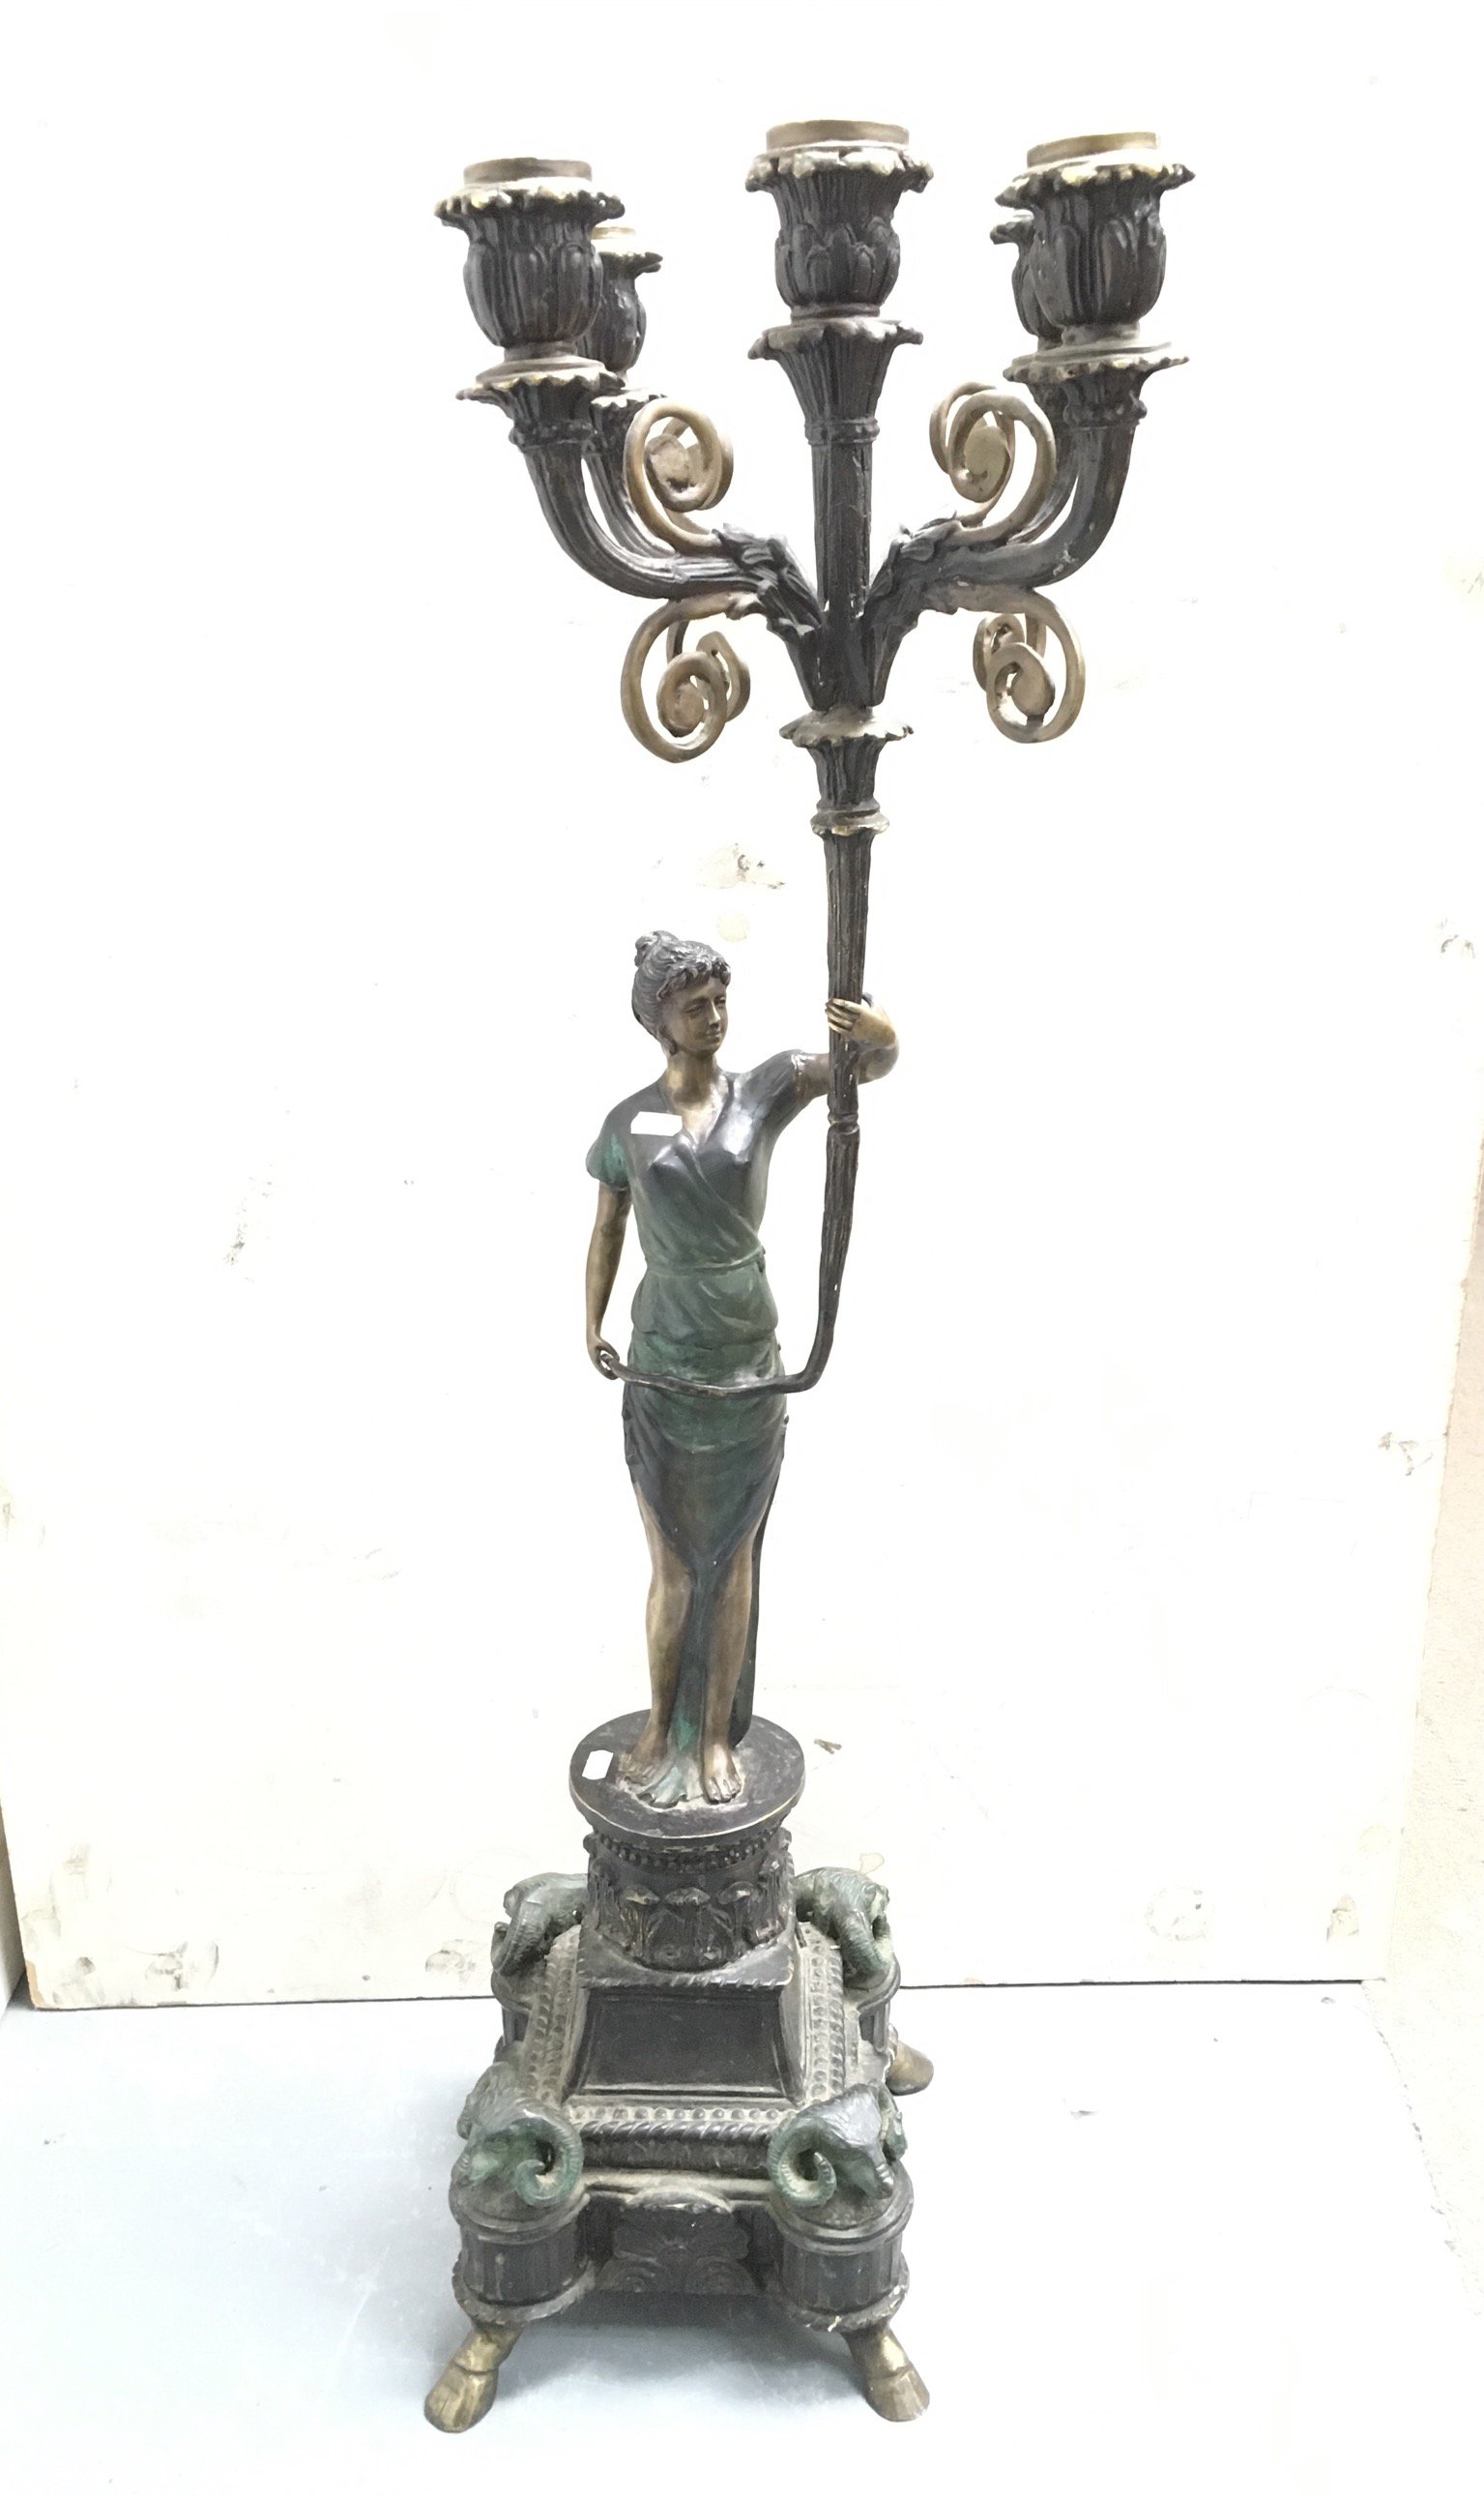 A heavily impressive bronze candelabra of a female